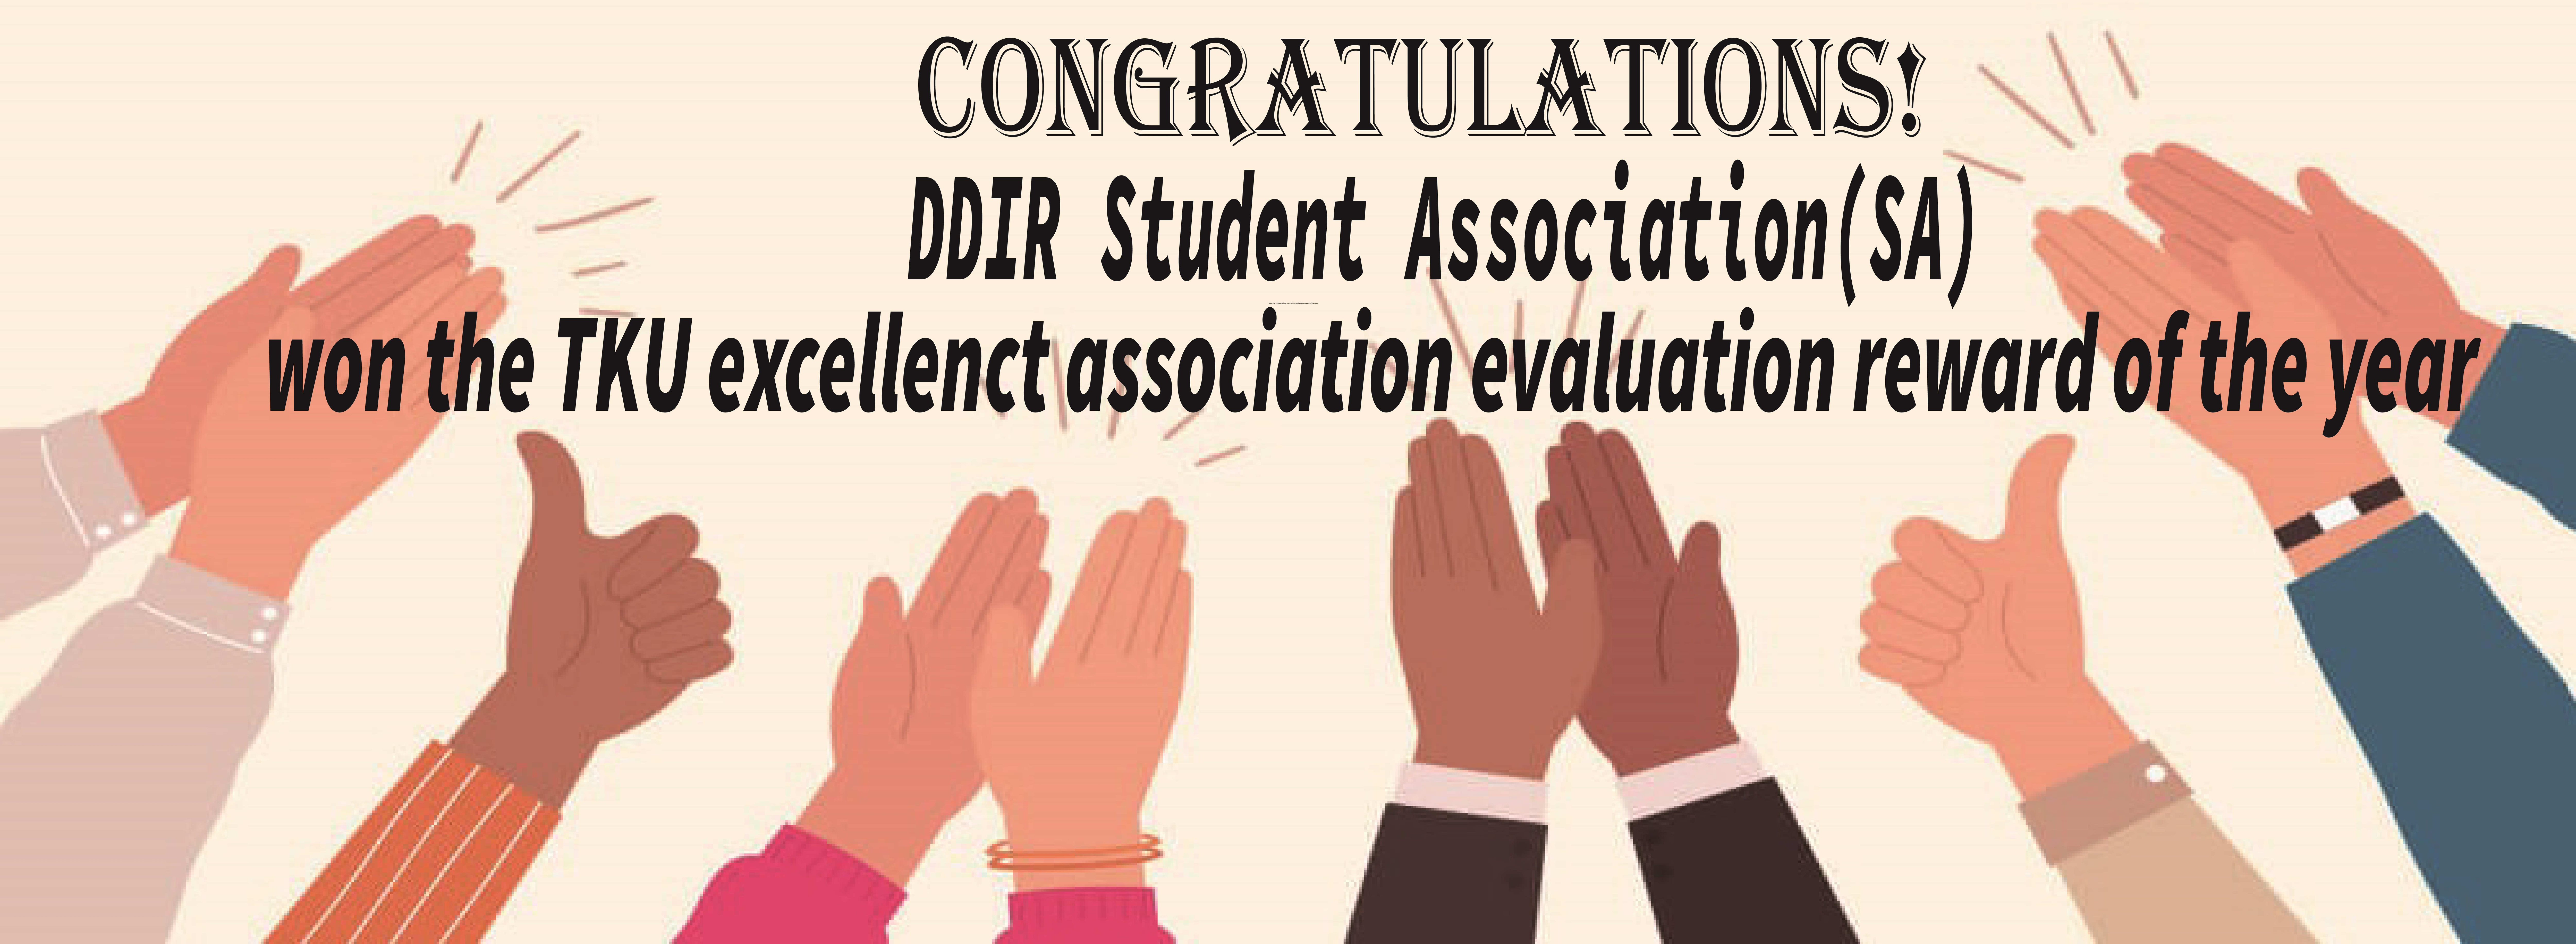 DDIRSA excellent associate reward of the year